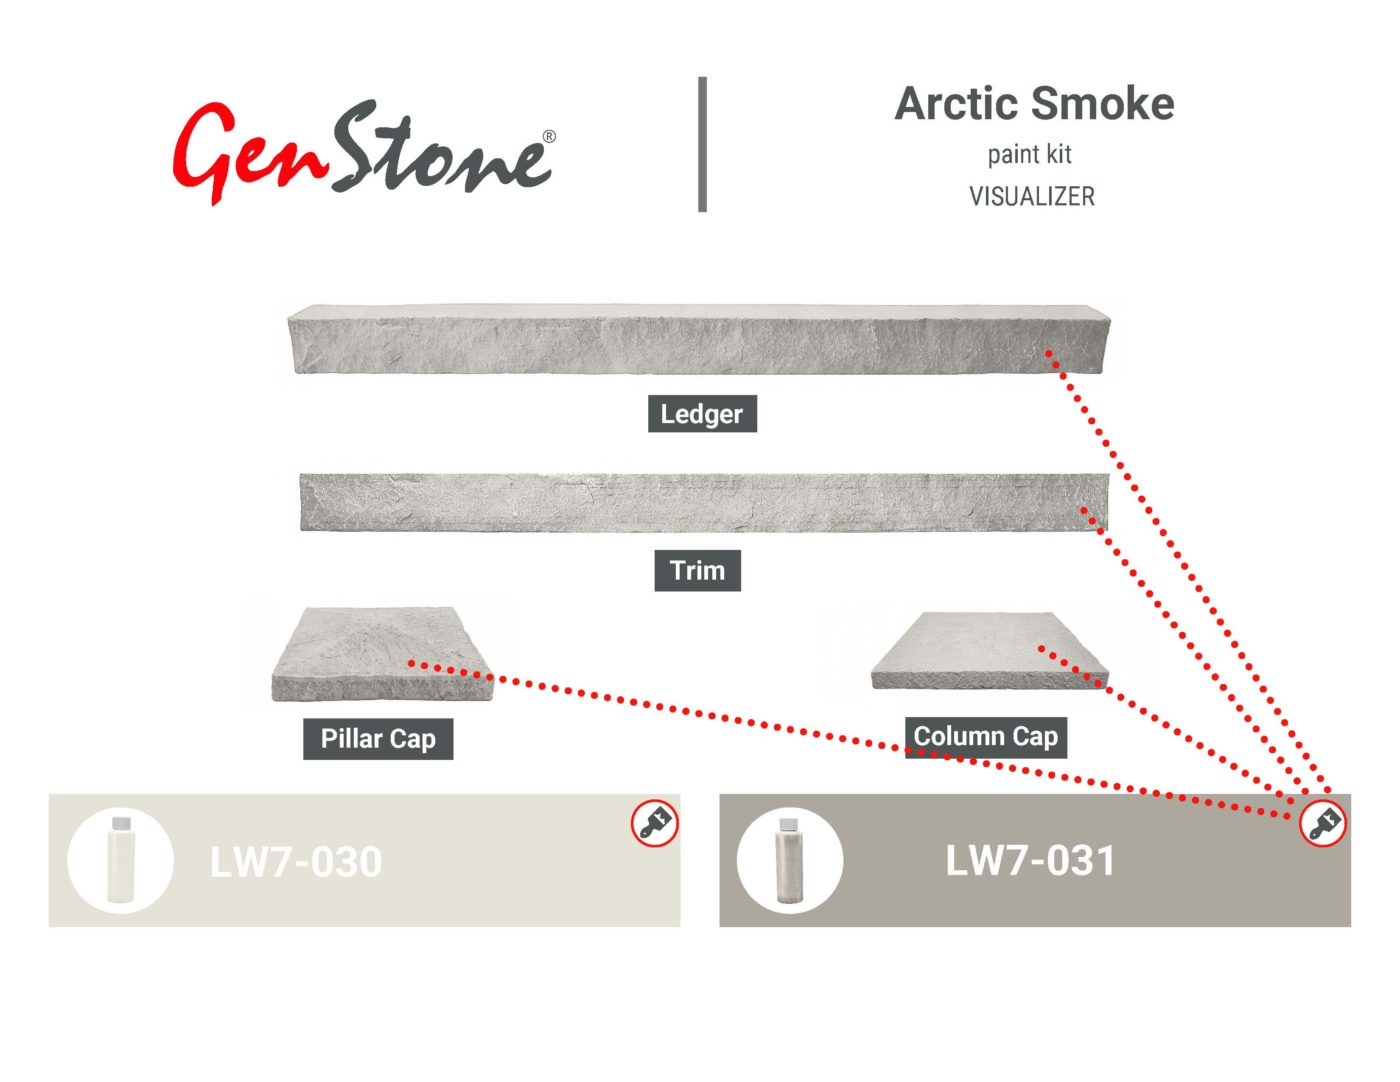 Arctic Smoke Paint Kit